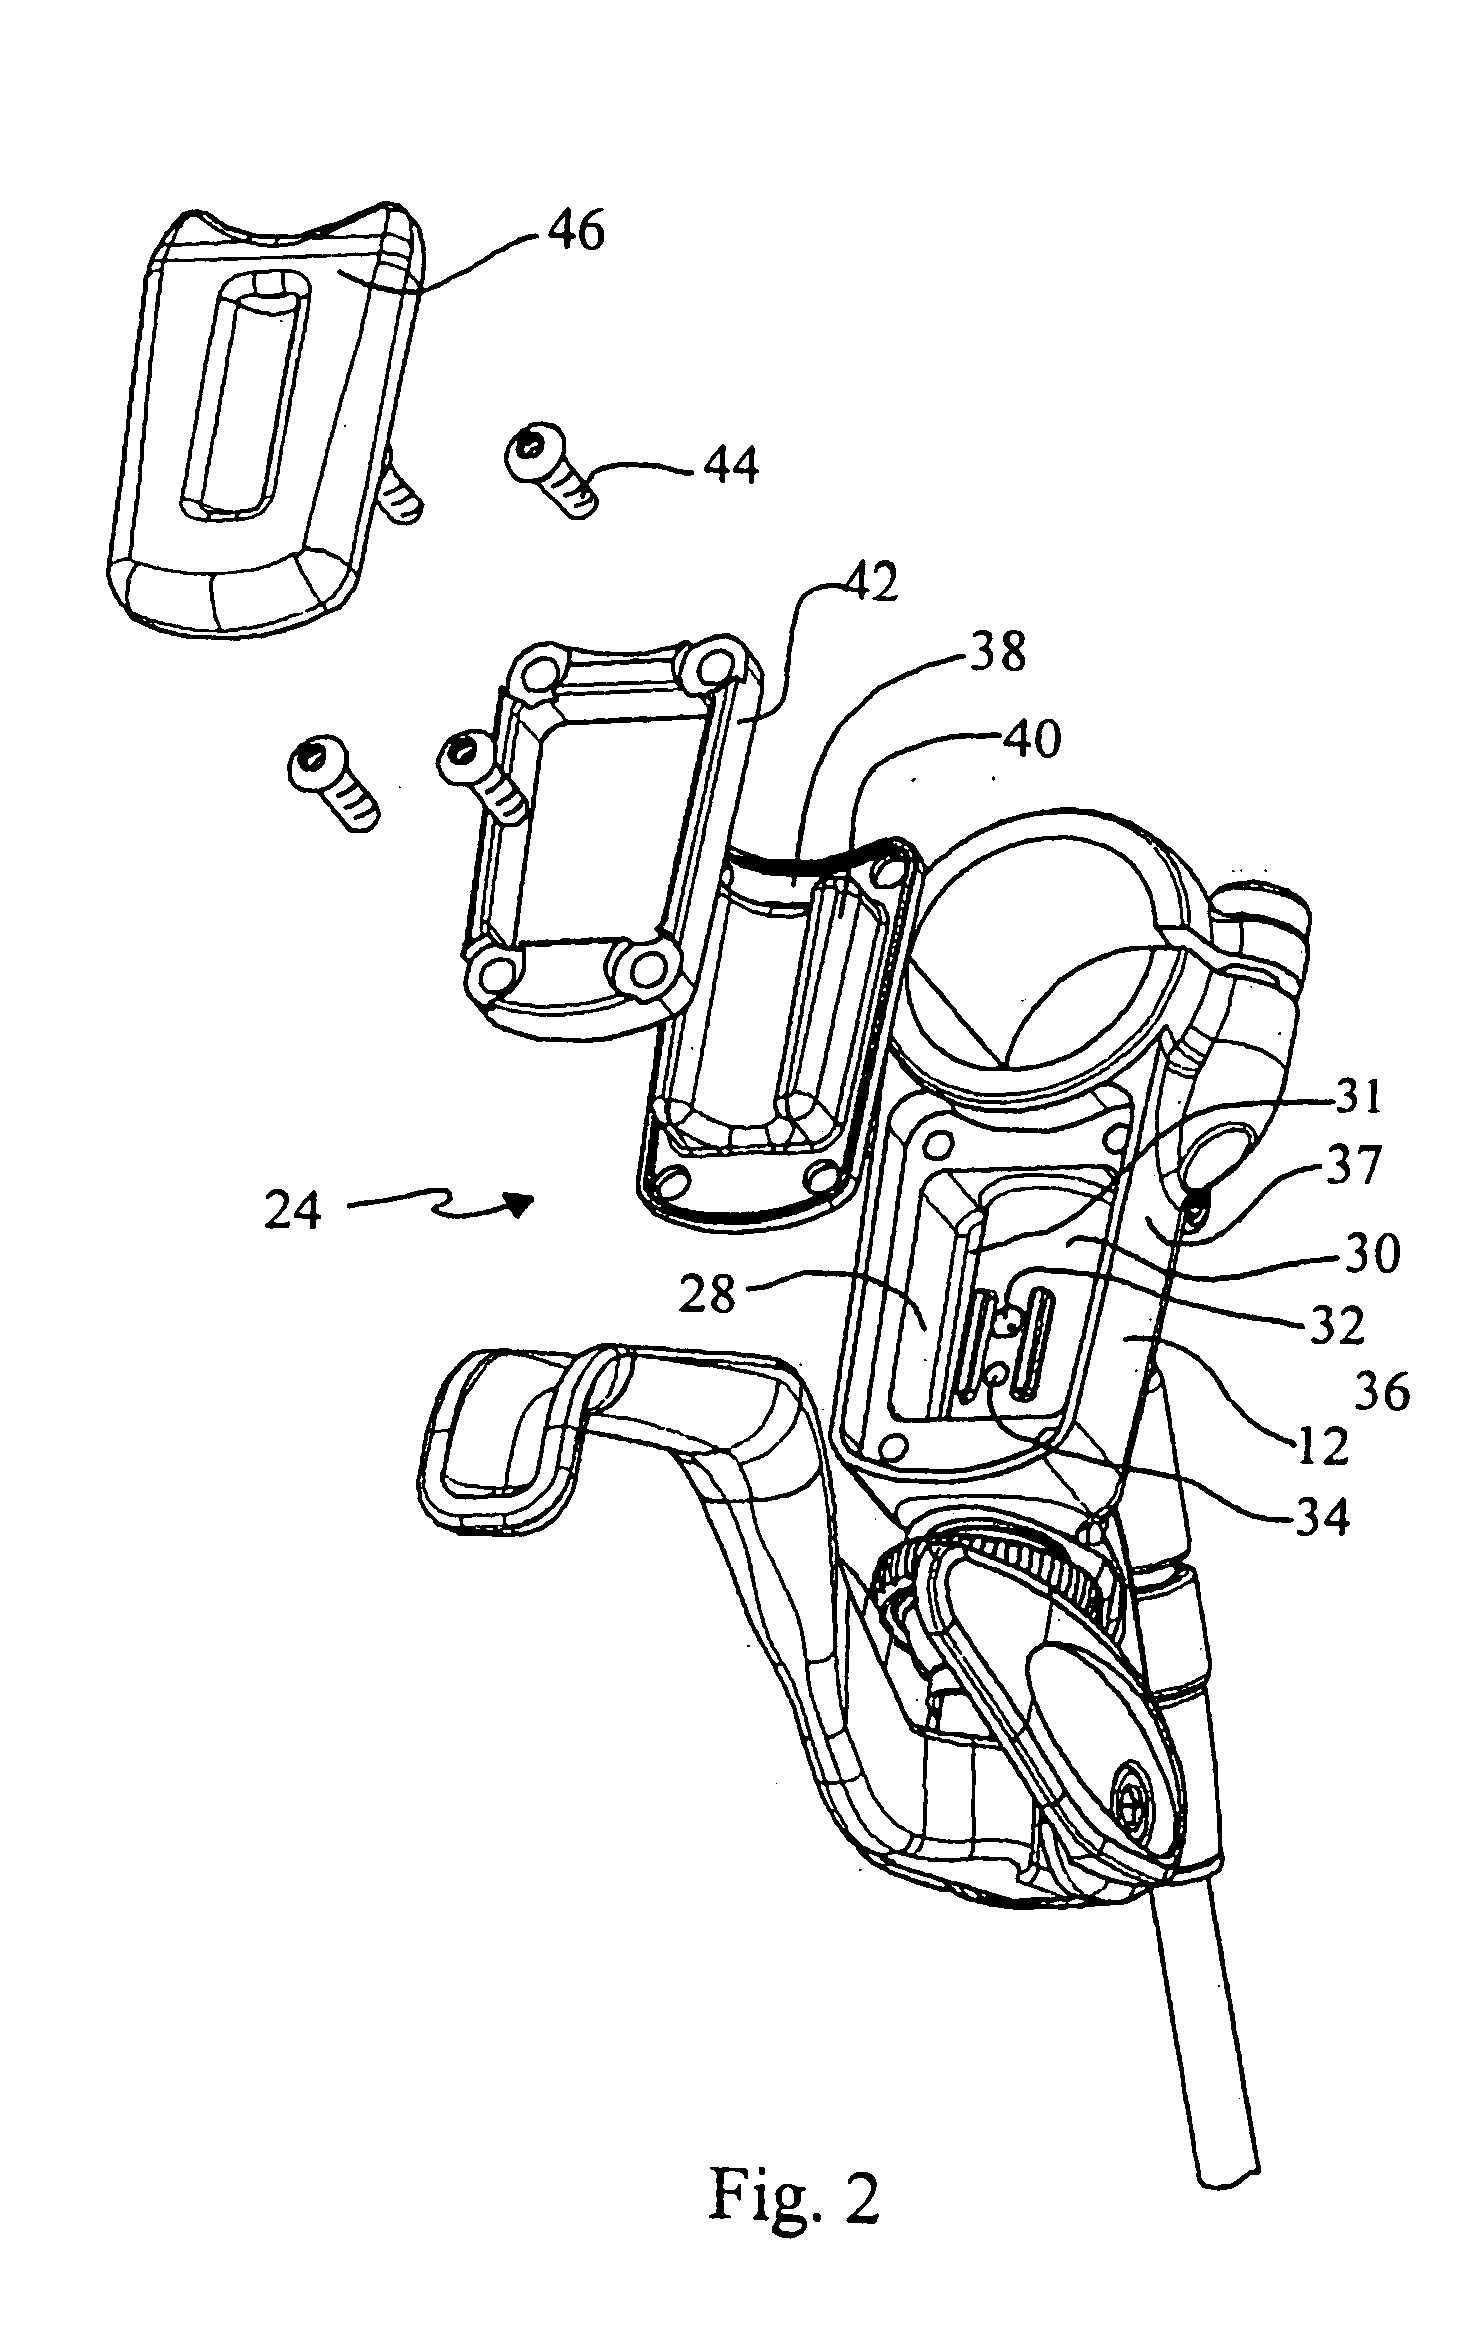 Master cylinder lever for a hydraulic disc brake having a backpack reservoir